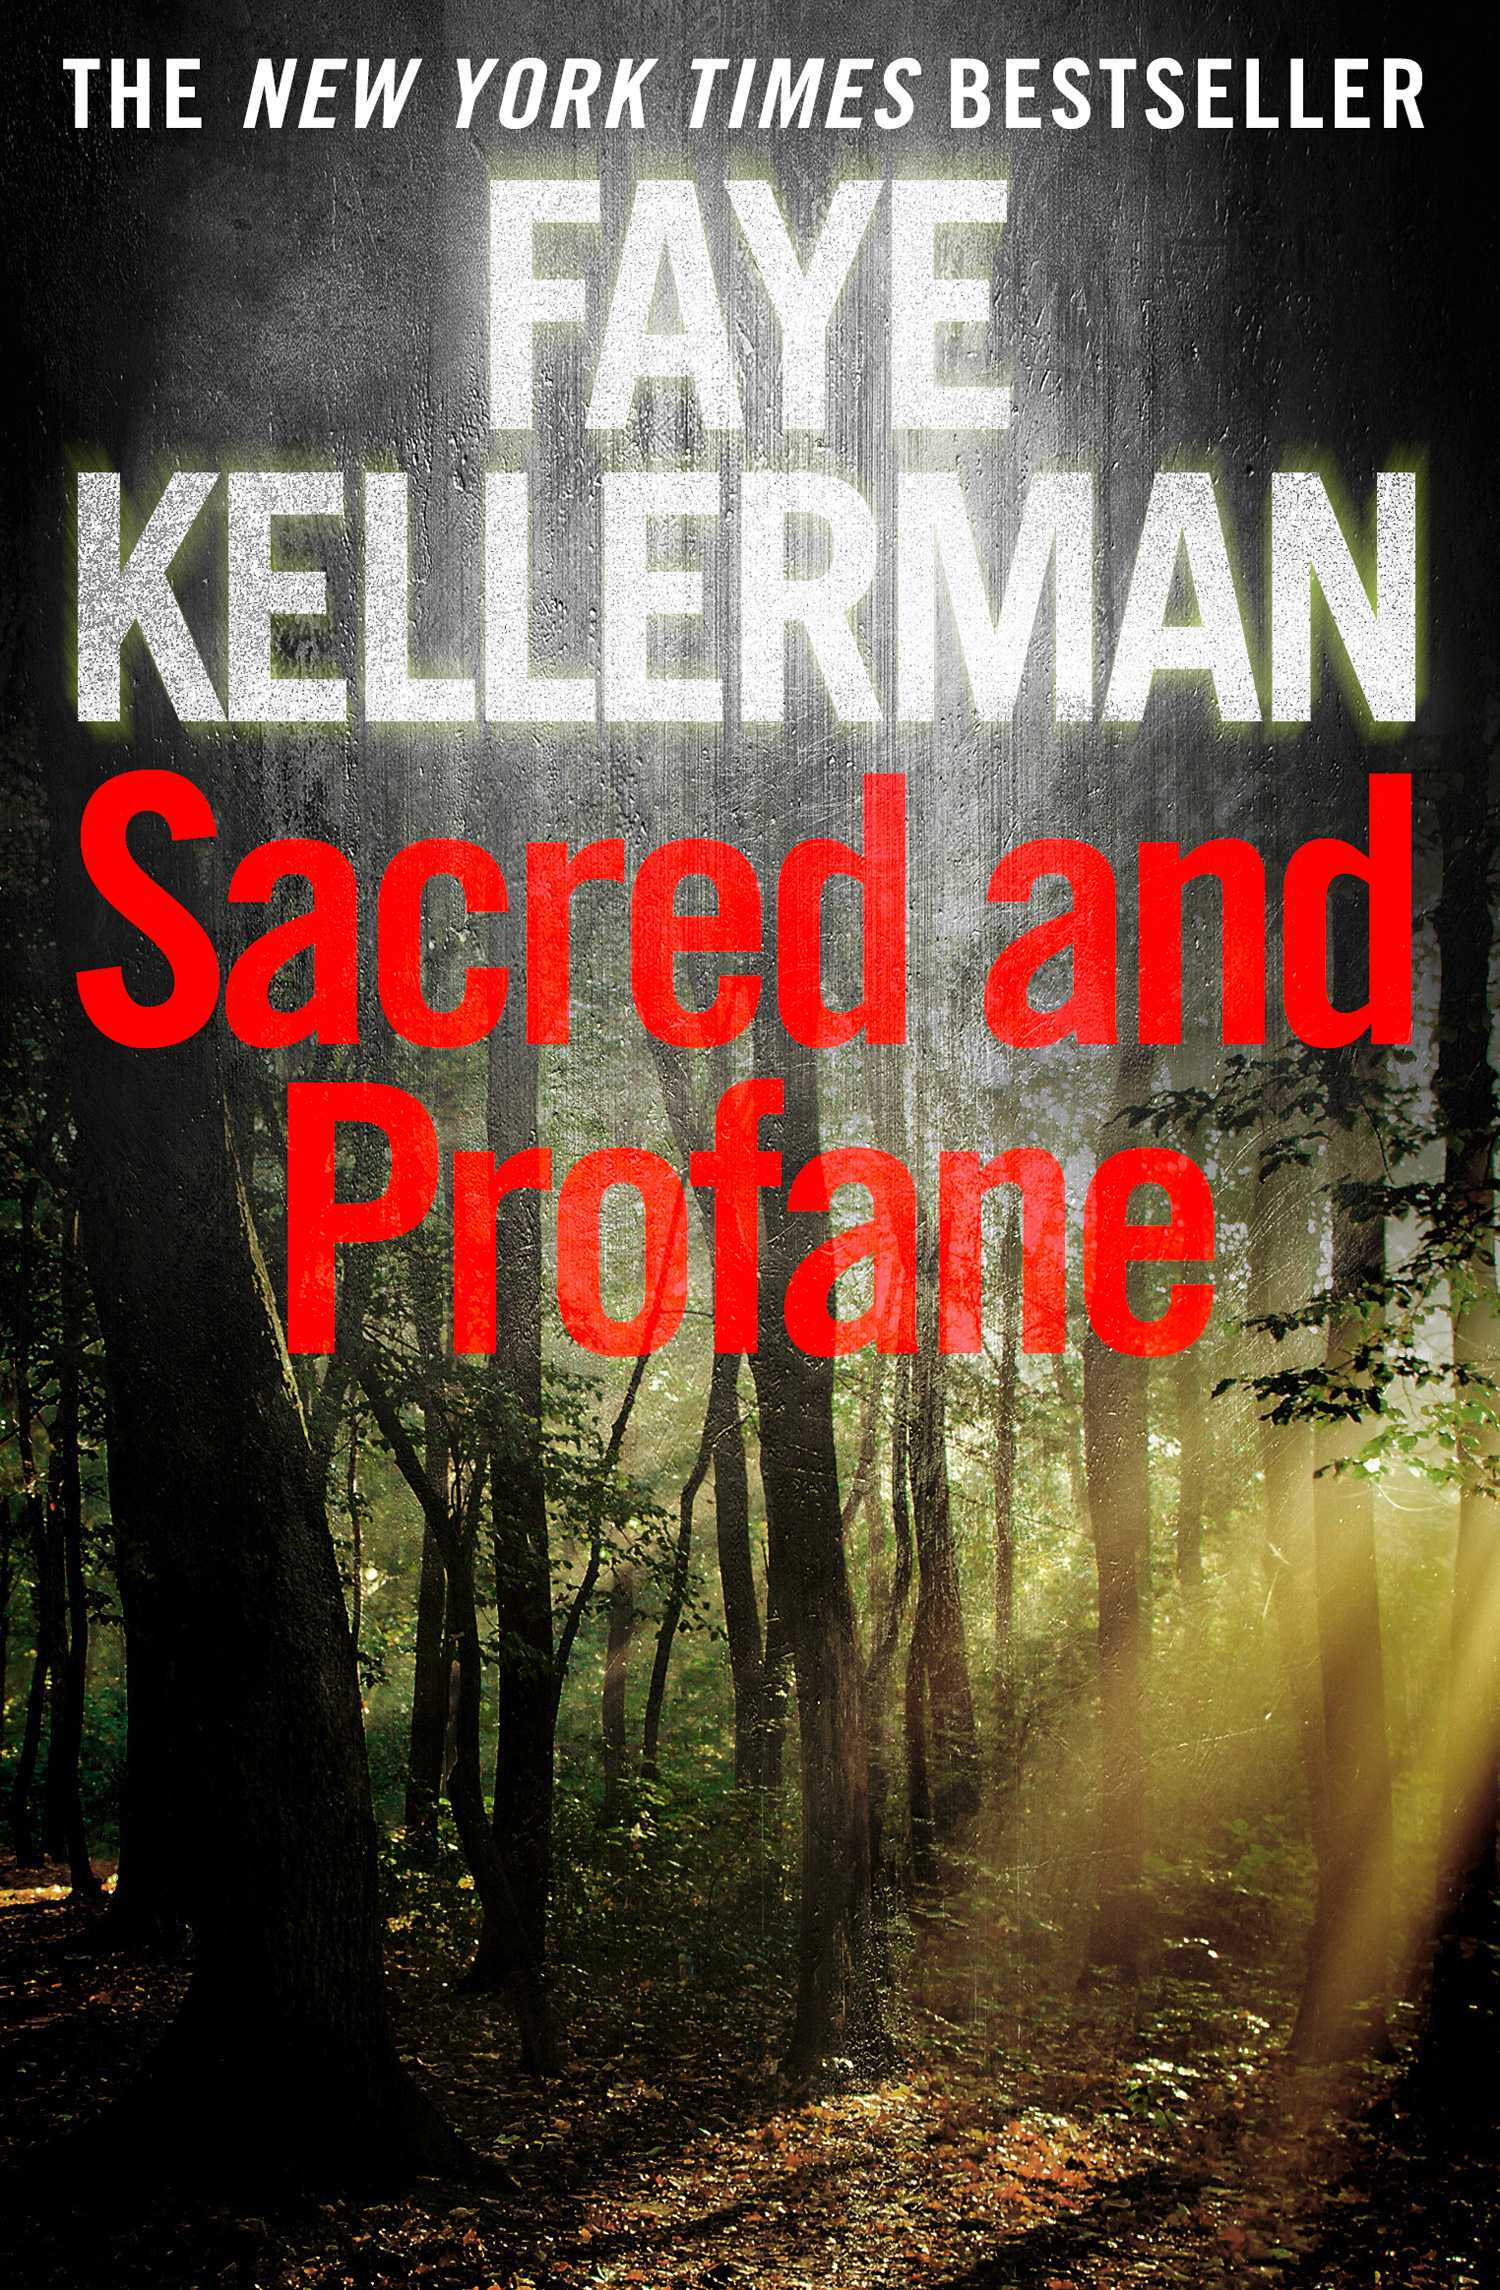 Faye Kellerman, Sacred and Profane read online at LitRes